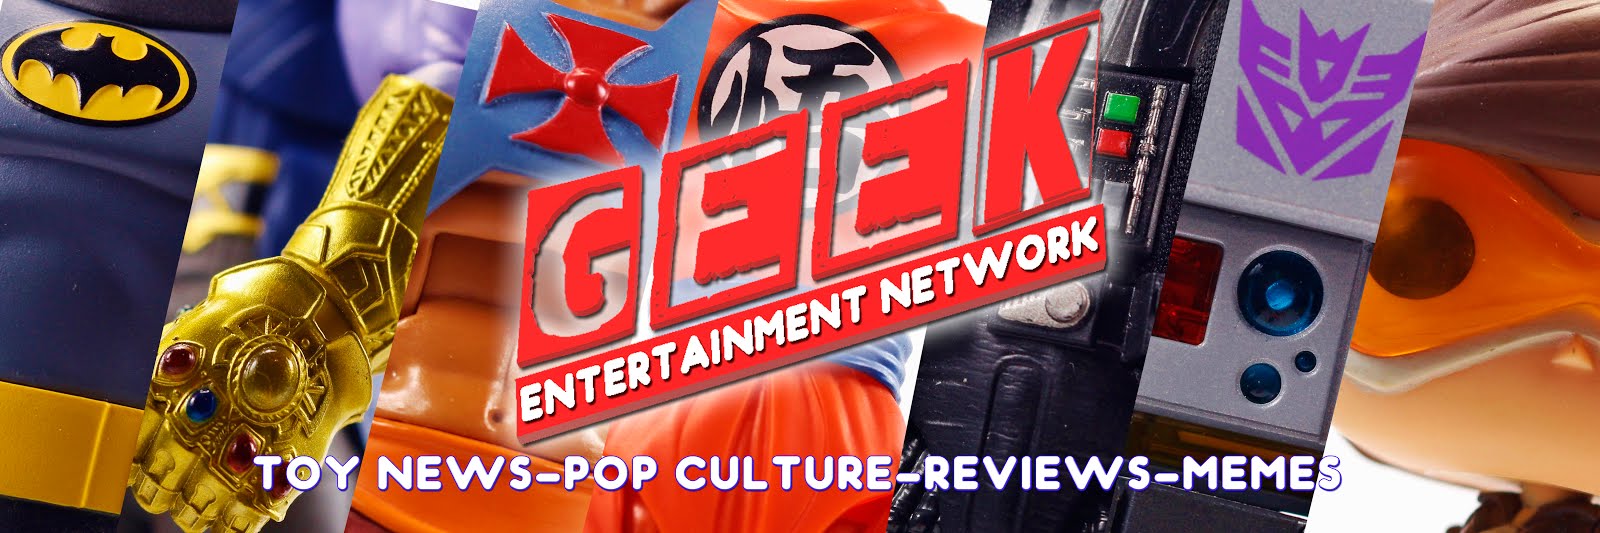 Geek Entertainment Network